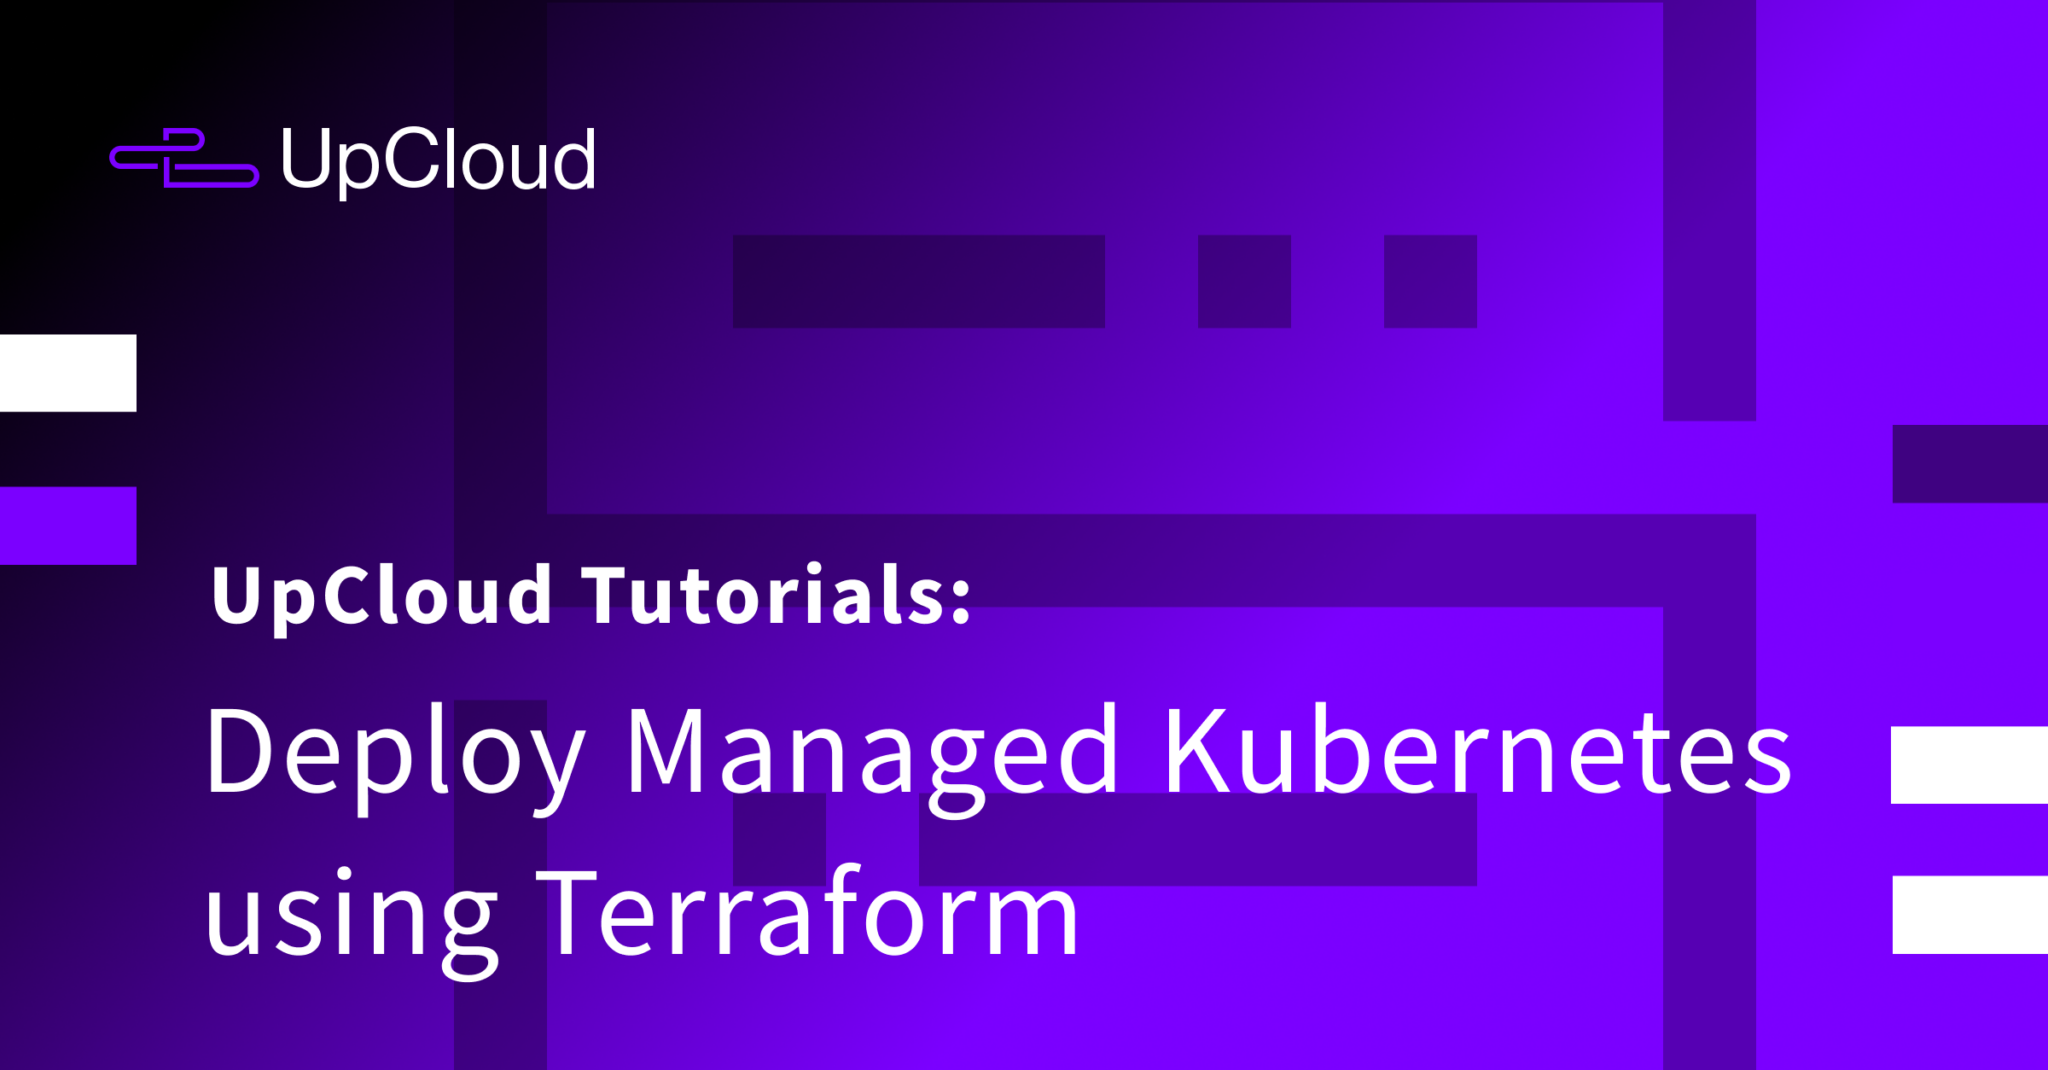 How to deploy Managed Kubernetes cluster using Terraform